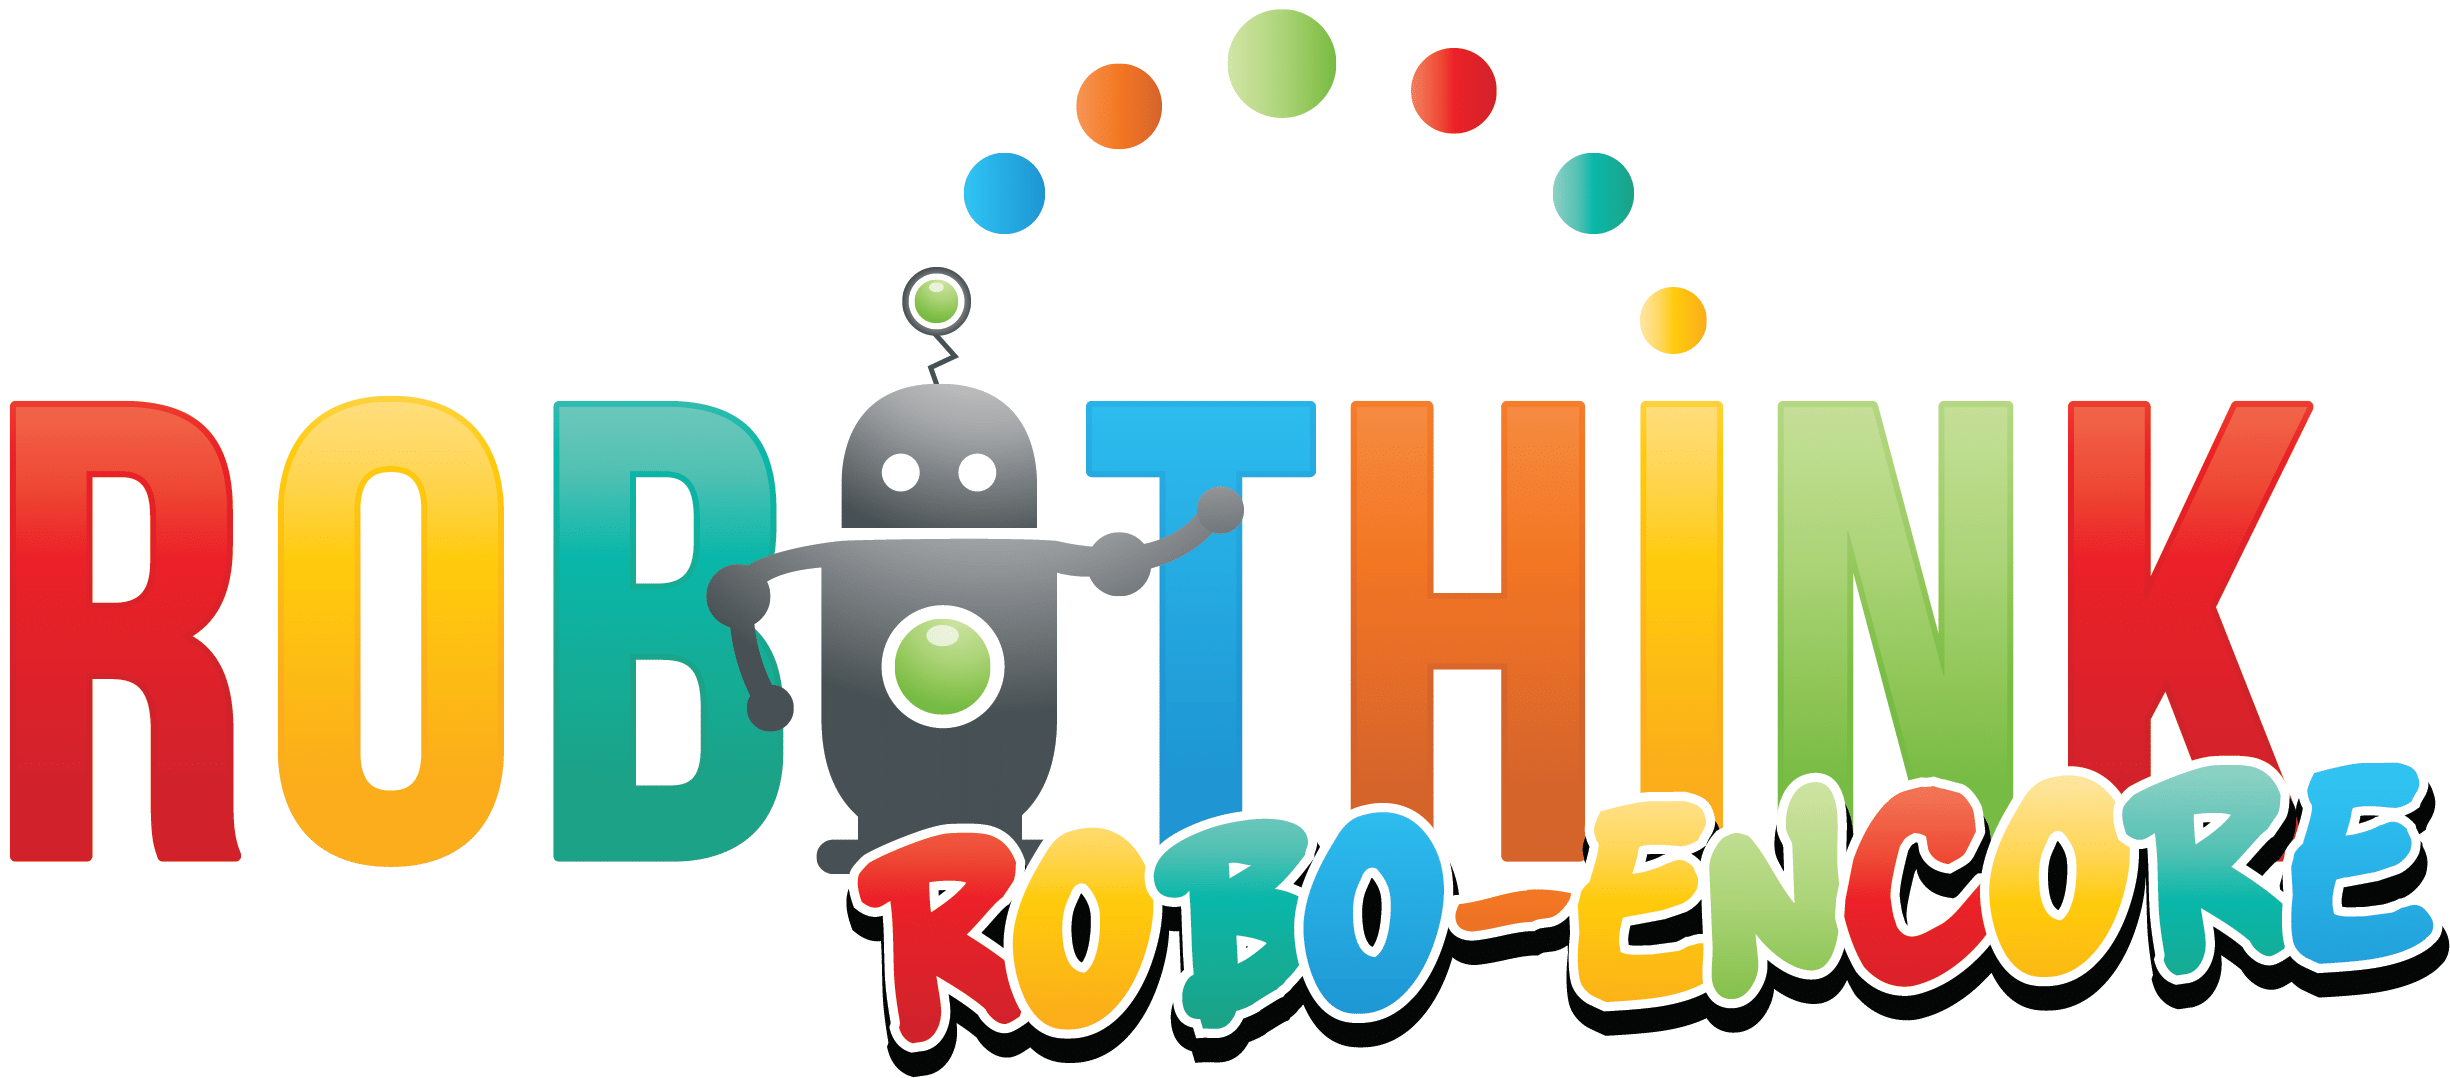 RoboThink Logo image for Encore session